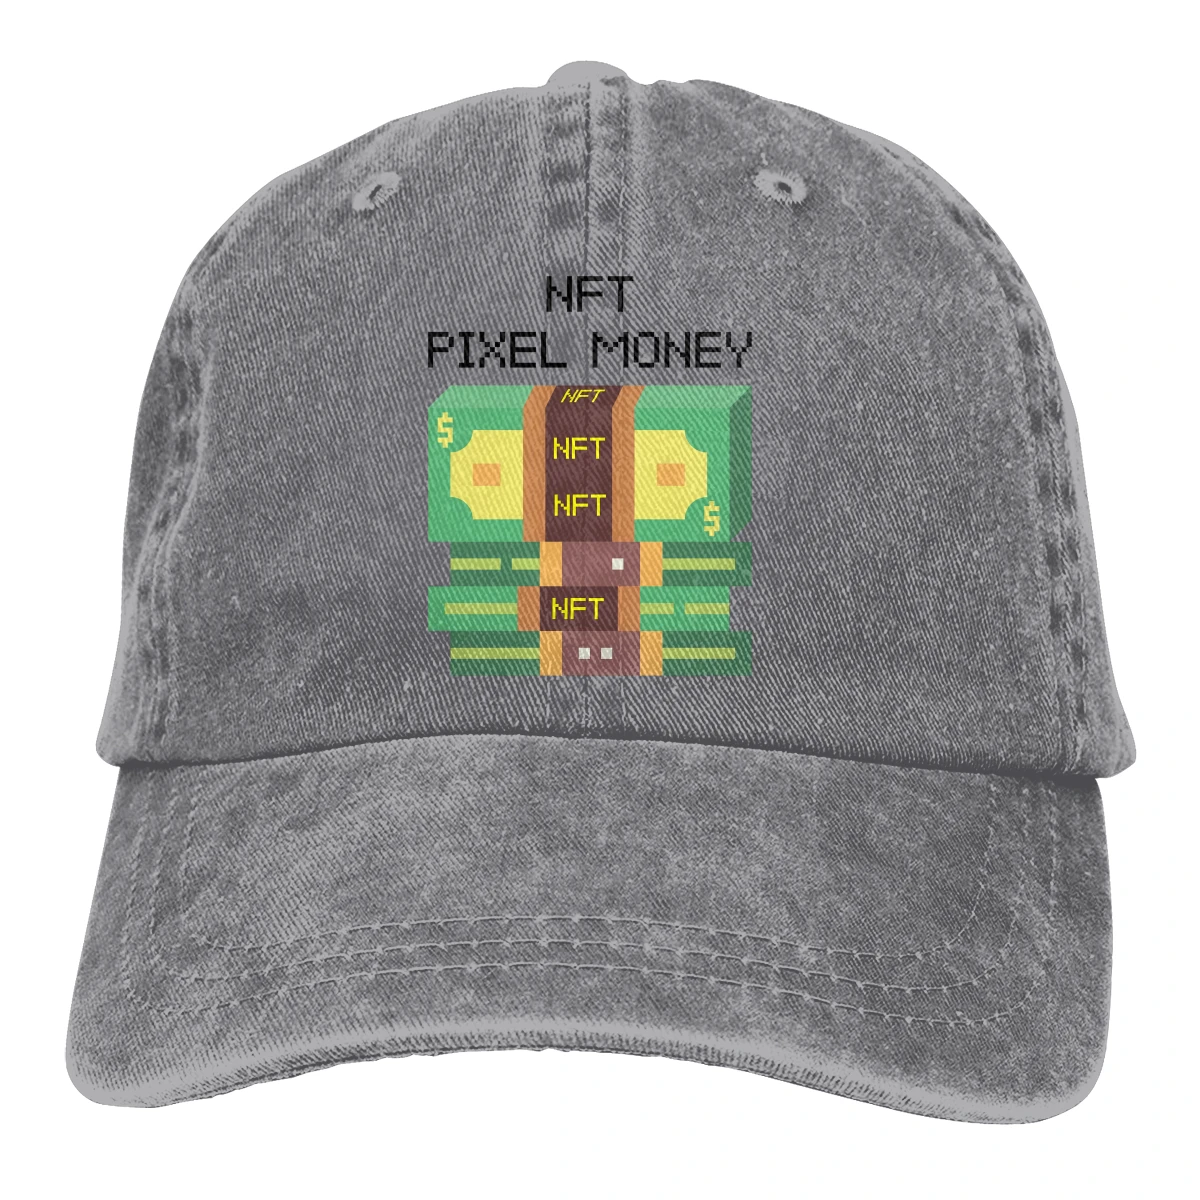 

Summer Cap Sun Visor Pixel Money Hip Hop Caps NFT Non Fungible Tokens Cowboy Hat Peaked Hats